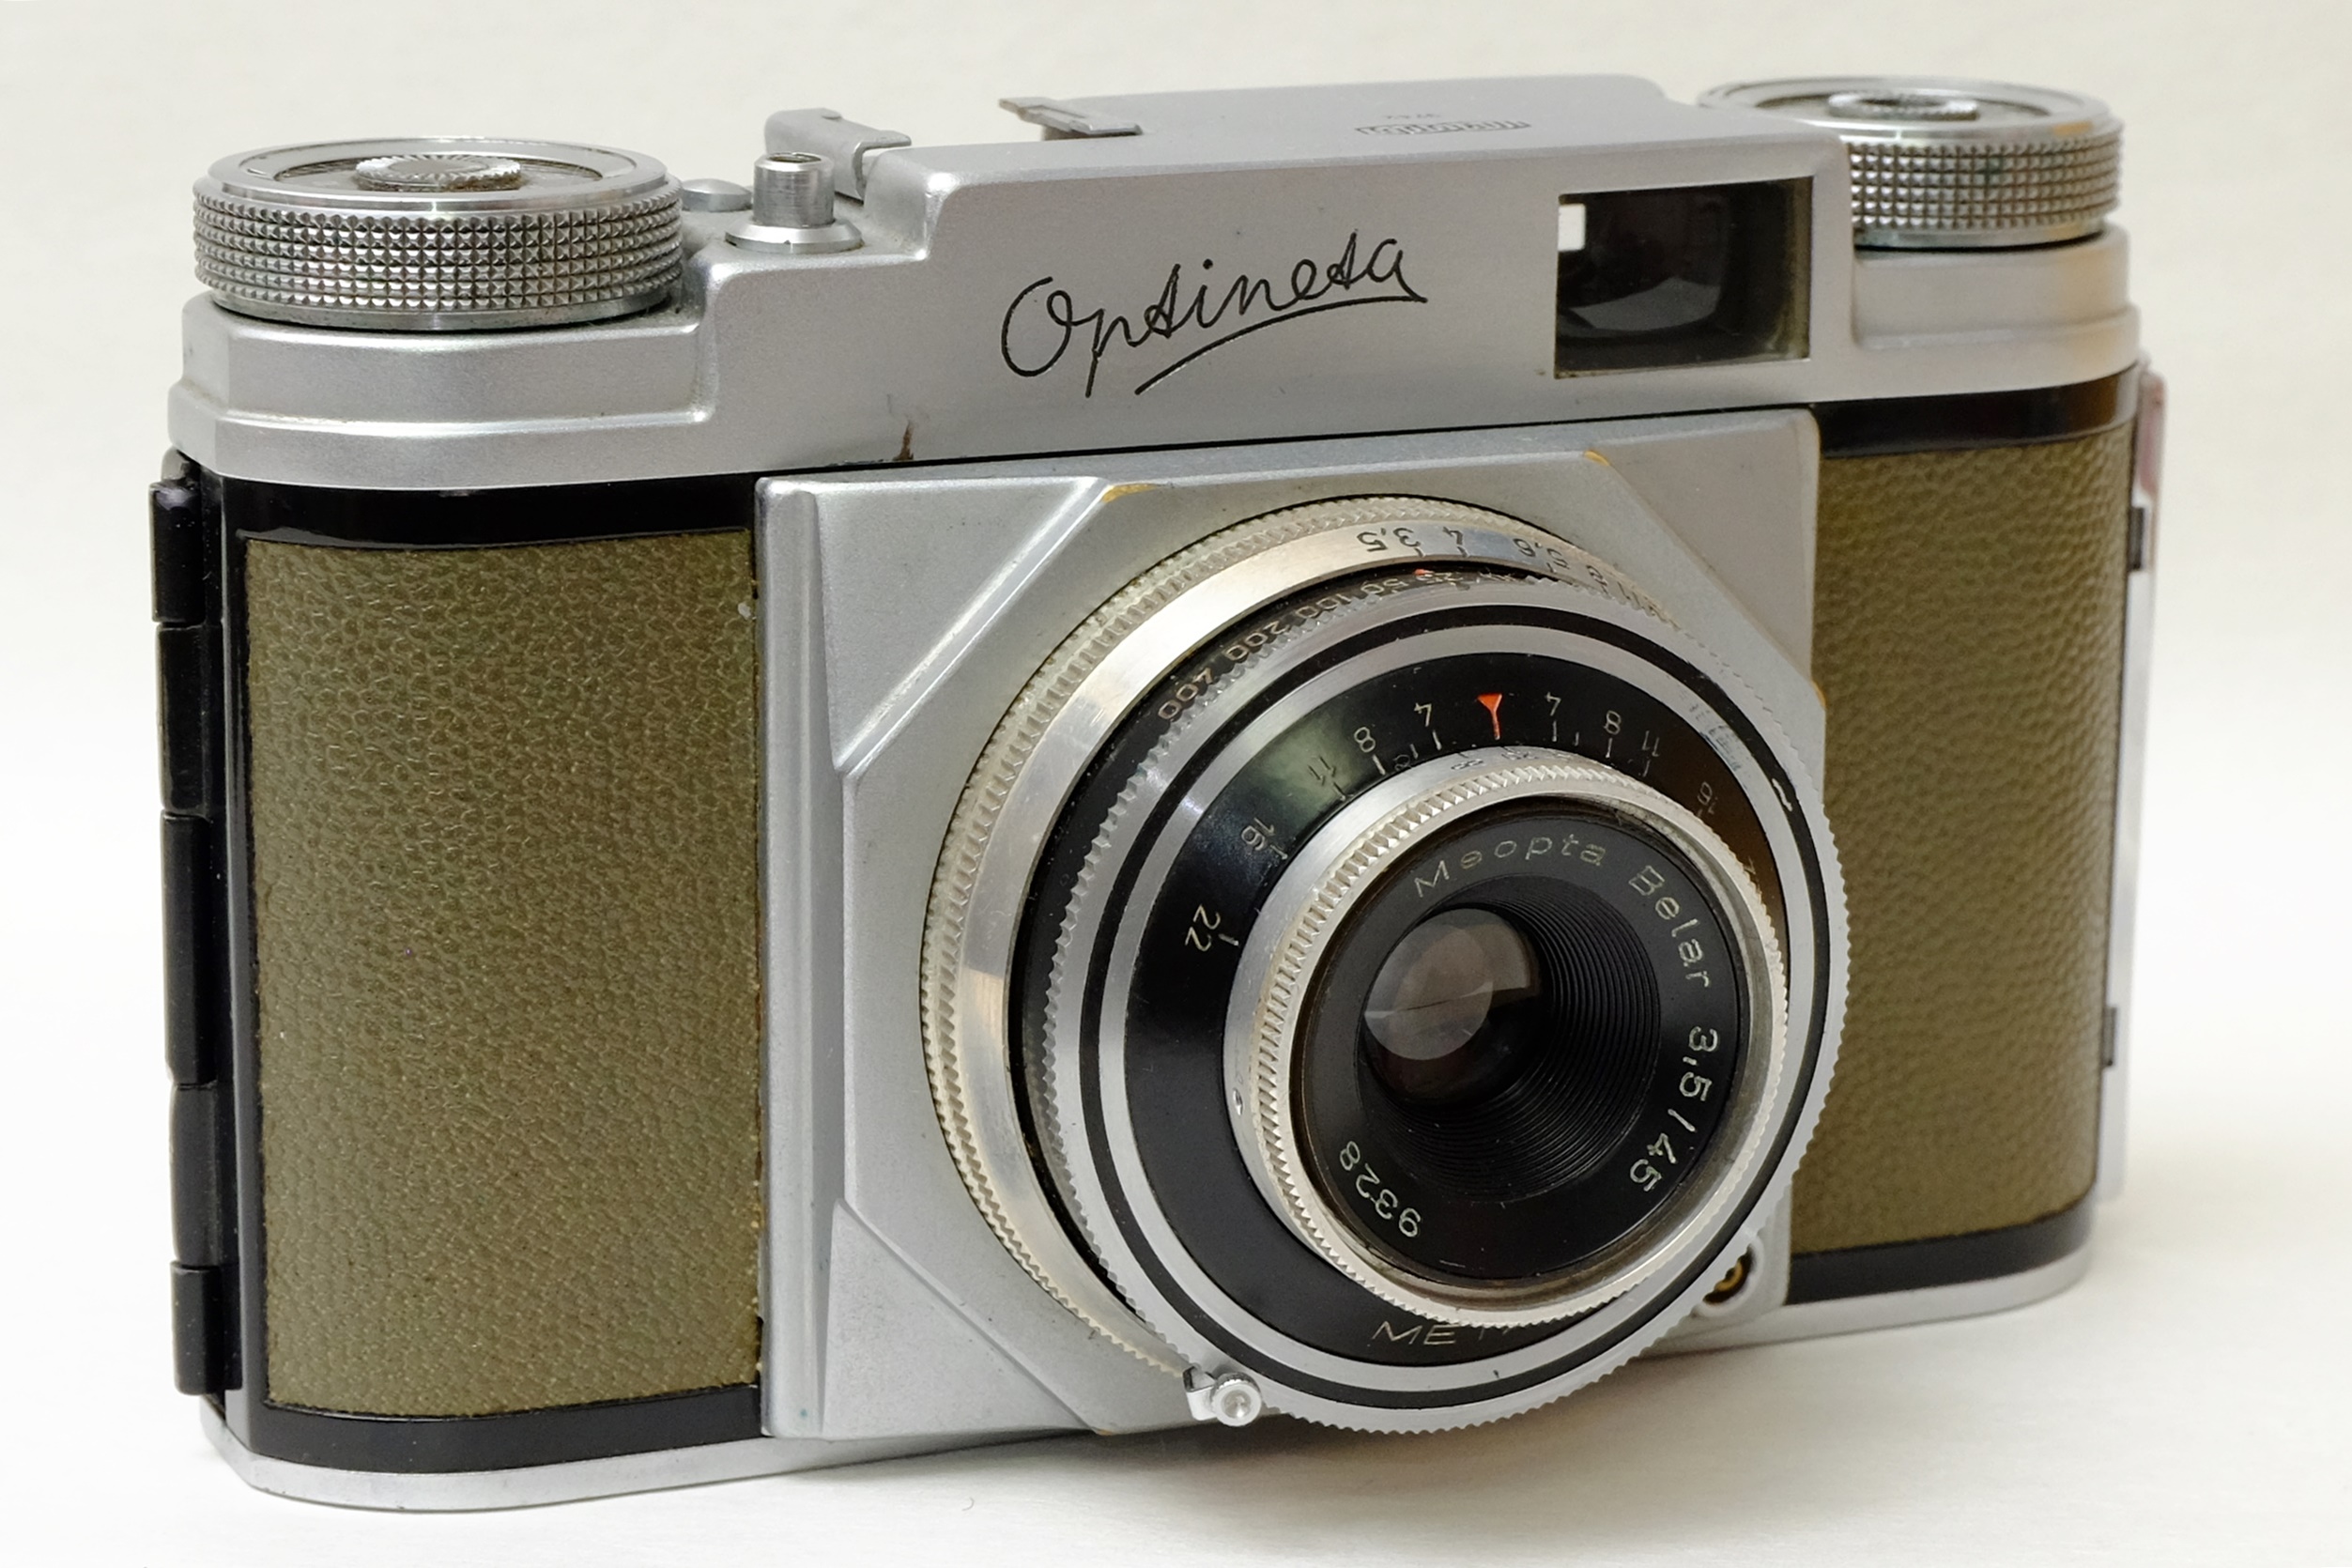 Optineta, Meopta's Czechoslovakia camera